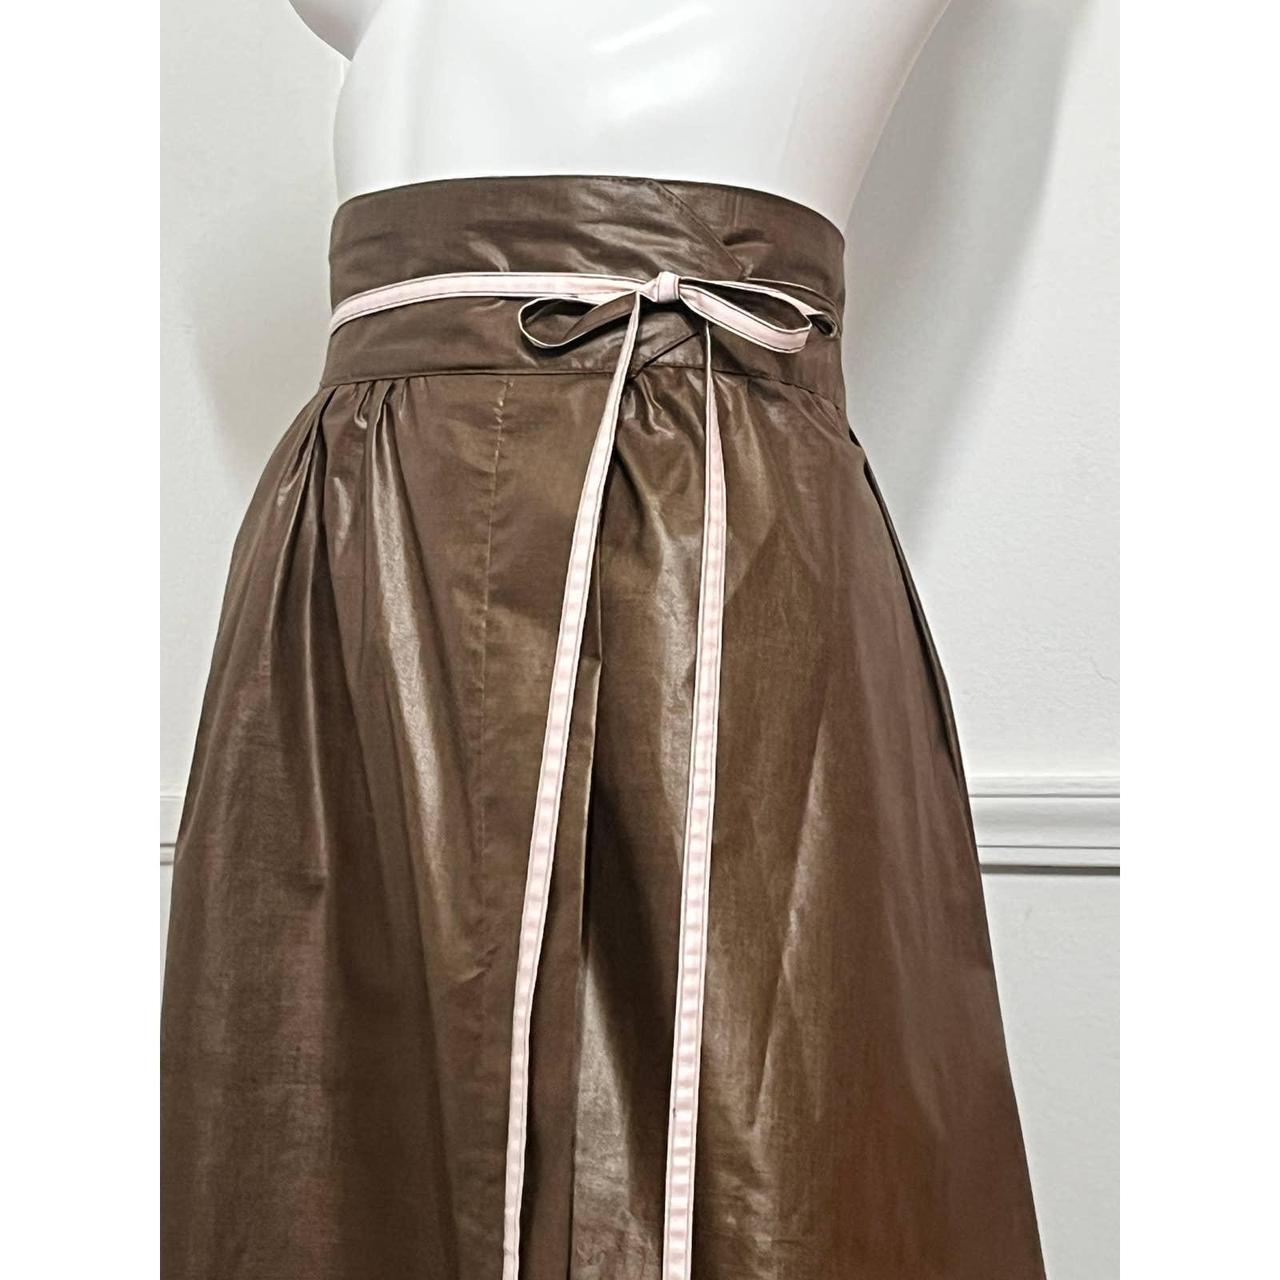 Geoffrey Beene Women's Brown and Pink Skirt (4)